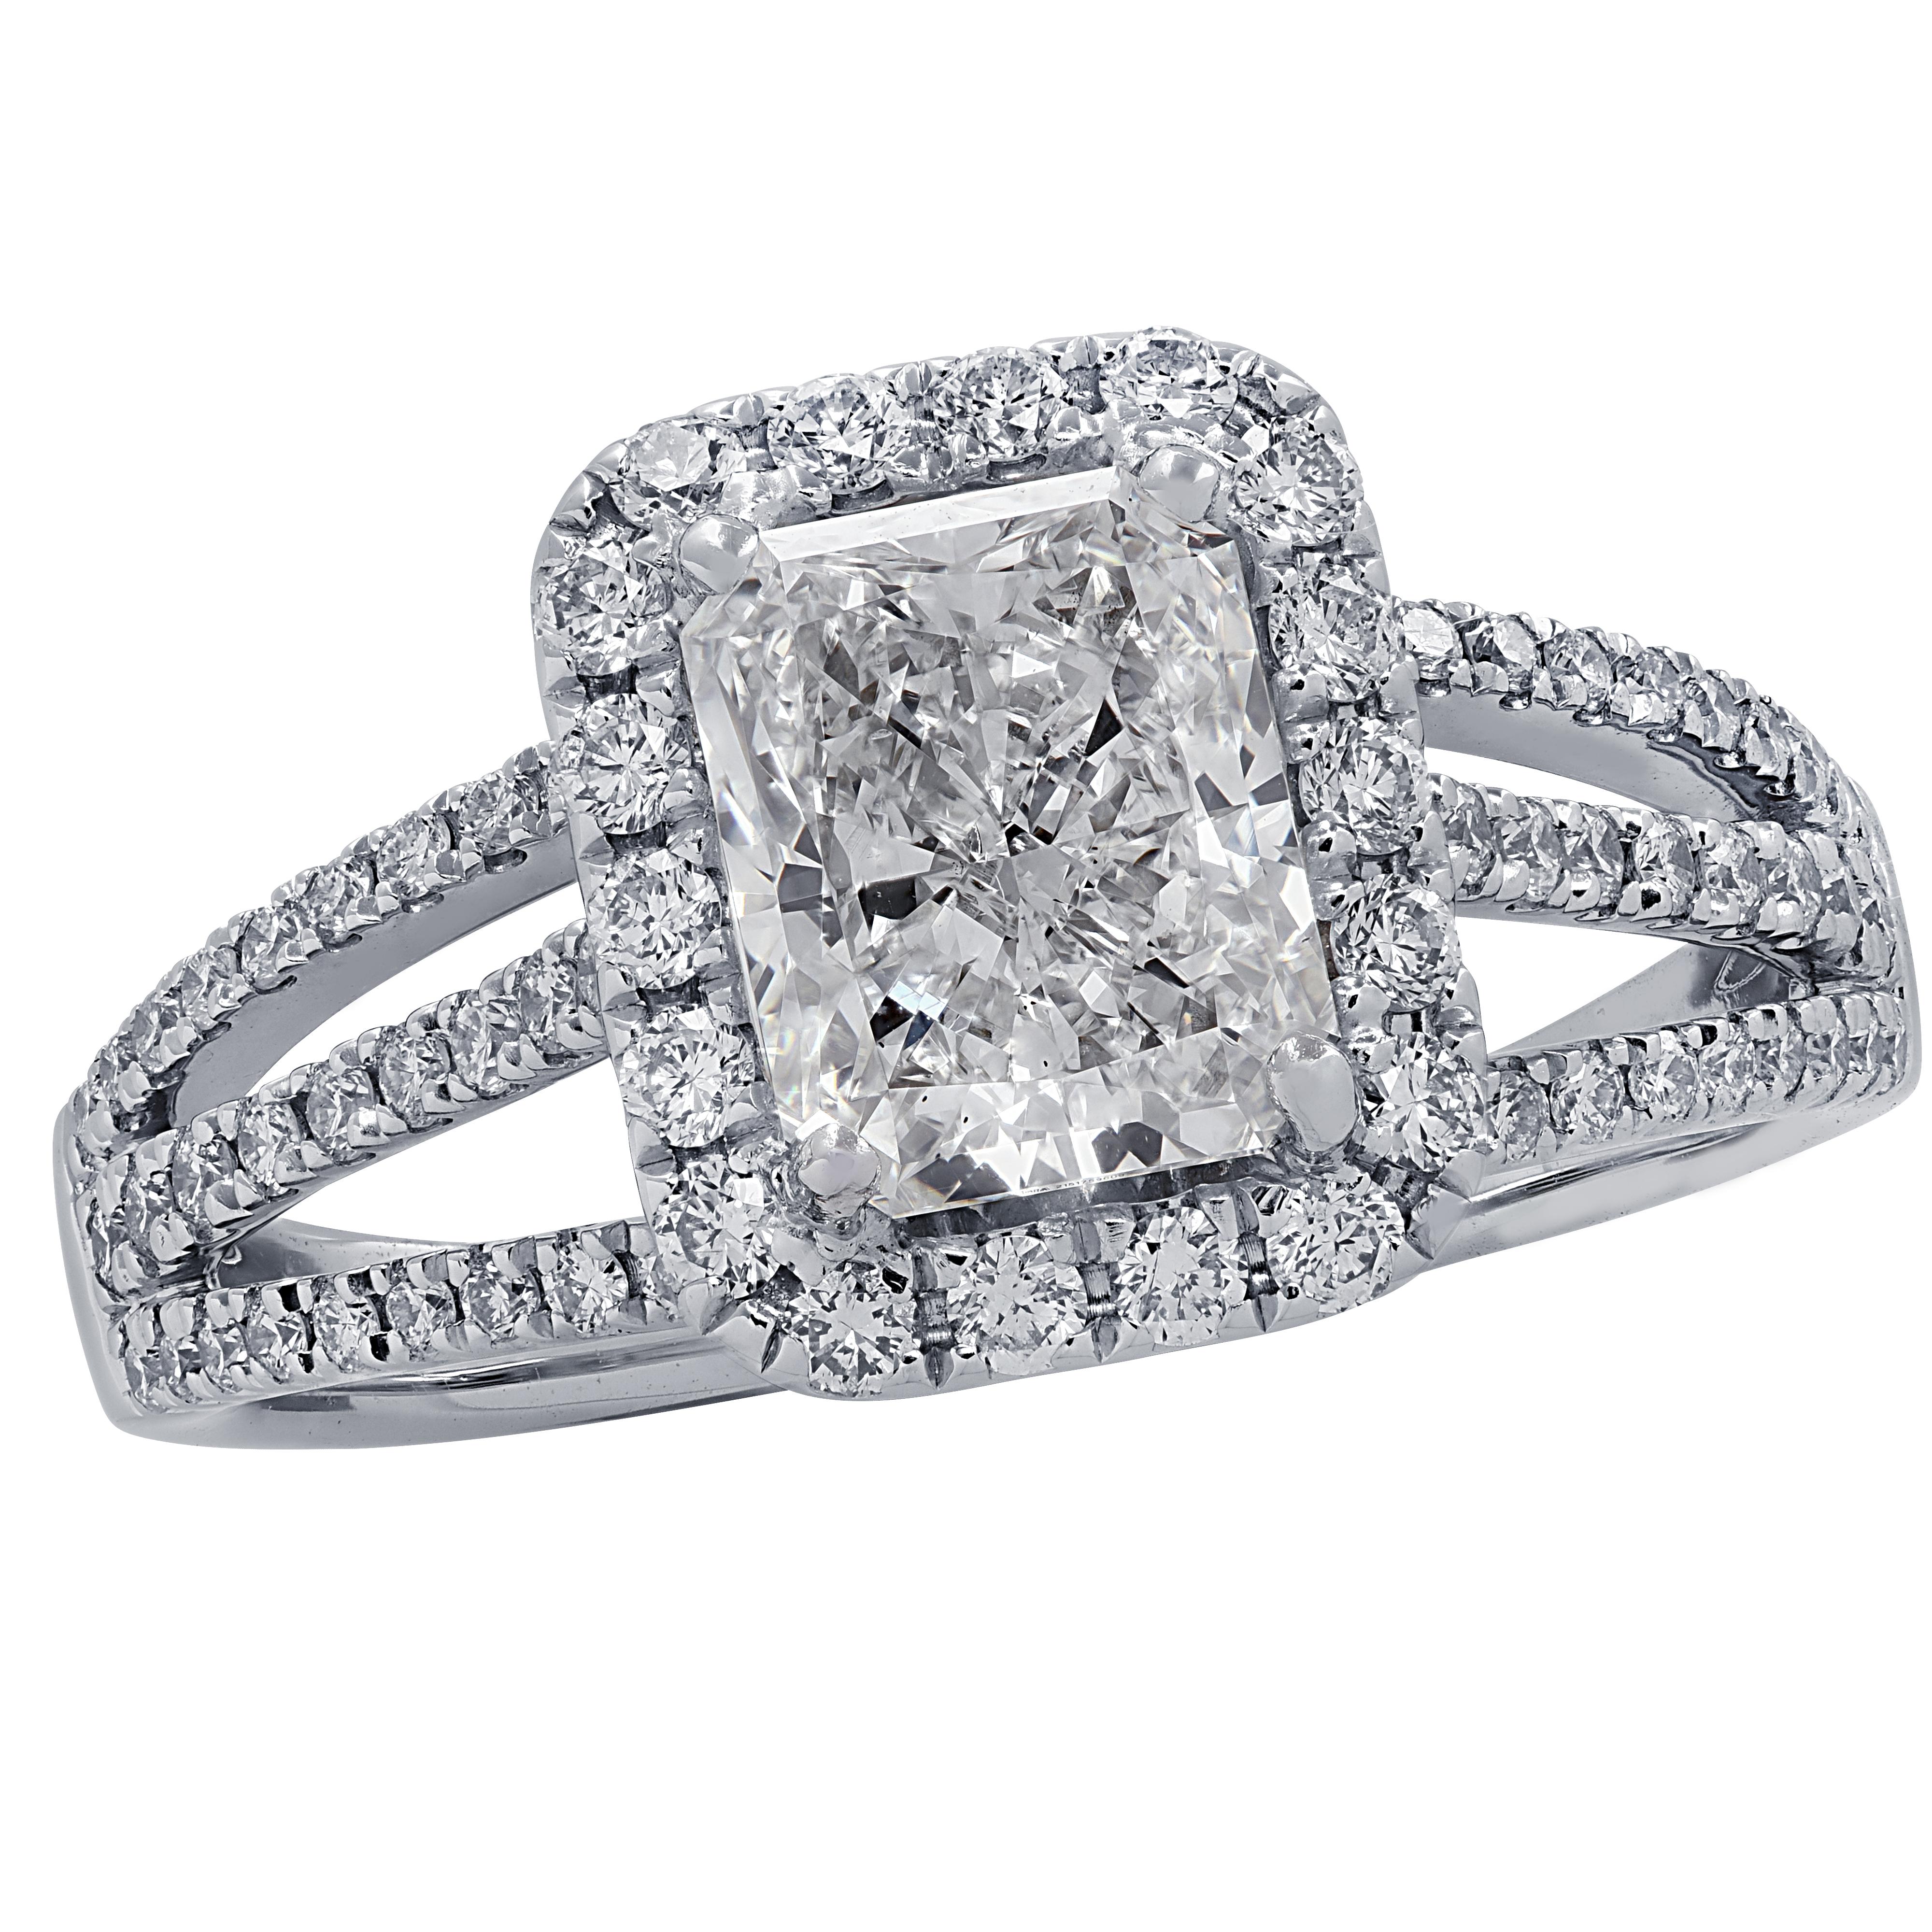 Women's Vivid Diamonds 1.51 Carat Diamond Engagement Ring